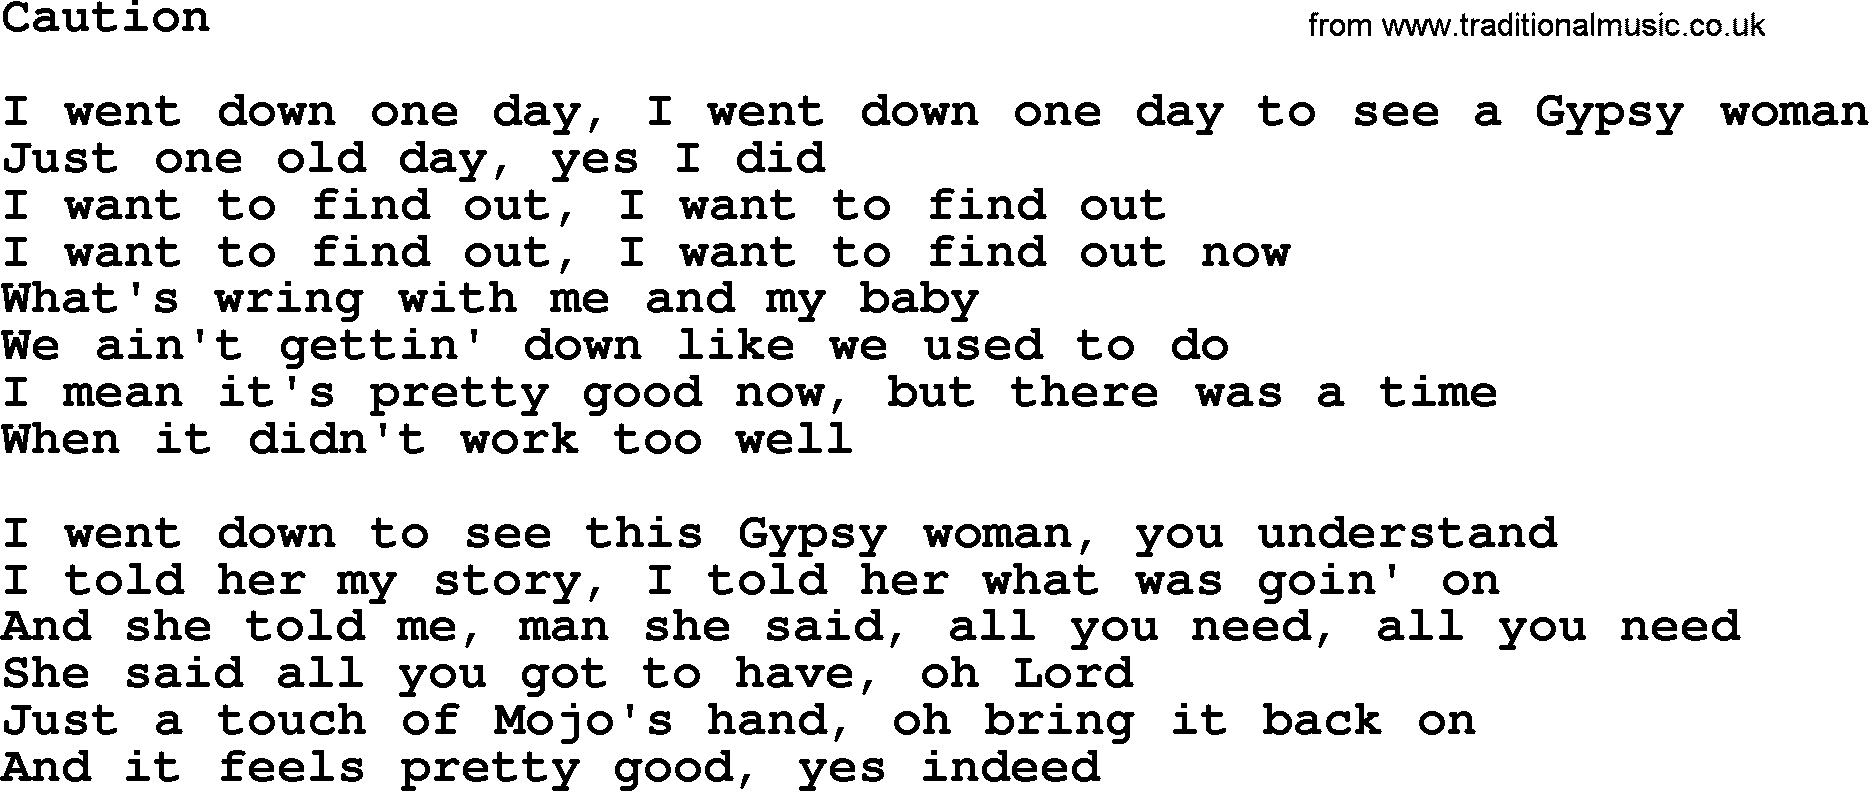 The Byrds song Caution, lyrics